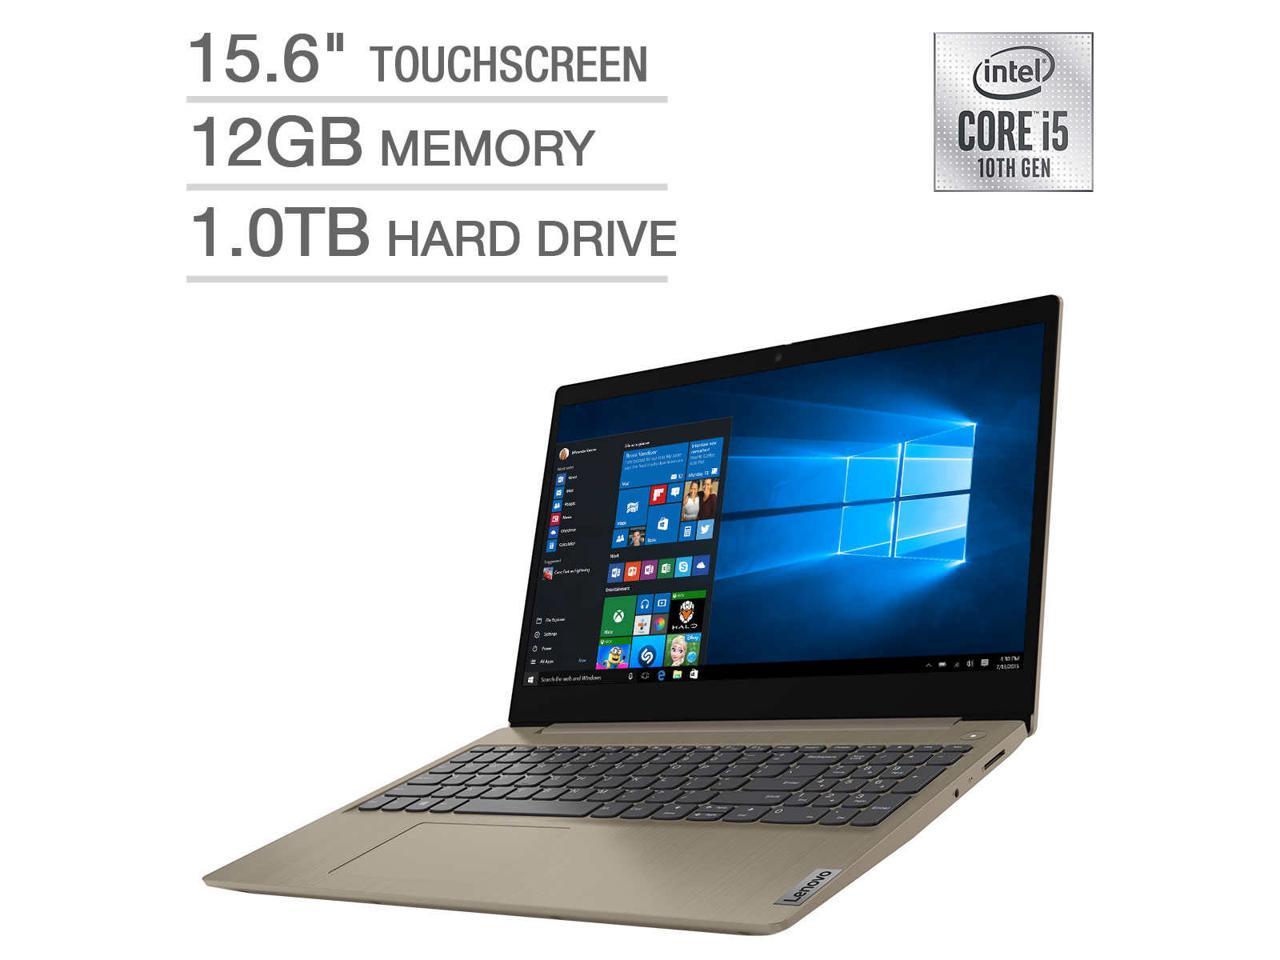 2020 Lenovo IdeaPad 3 15.6 Touchscreen Laptop - 10th Gen Intel Core  i5-1035G1, 12GB DDR4 RAM 1TB Hard Drive Windows 10 Home - 81WE0045US